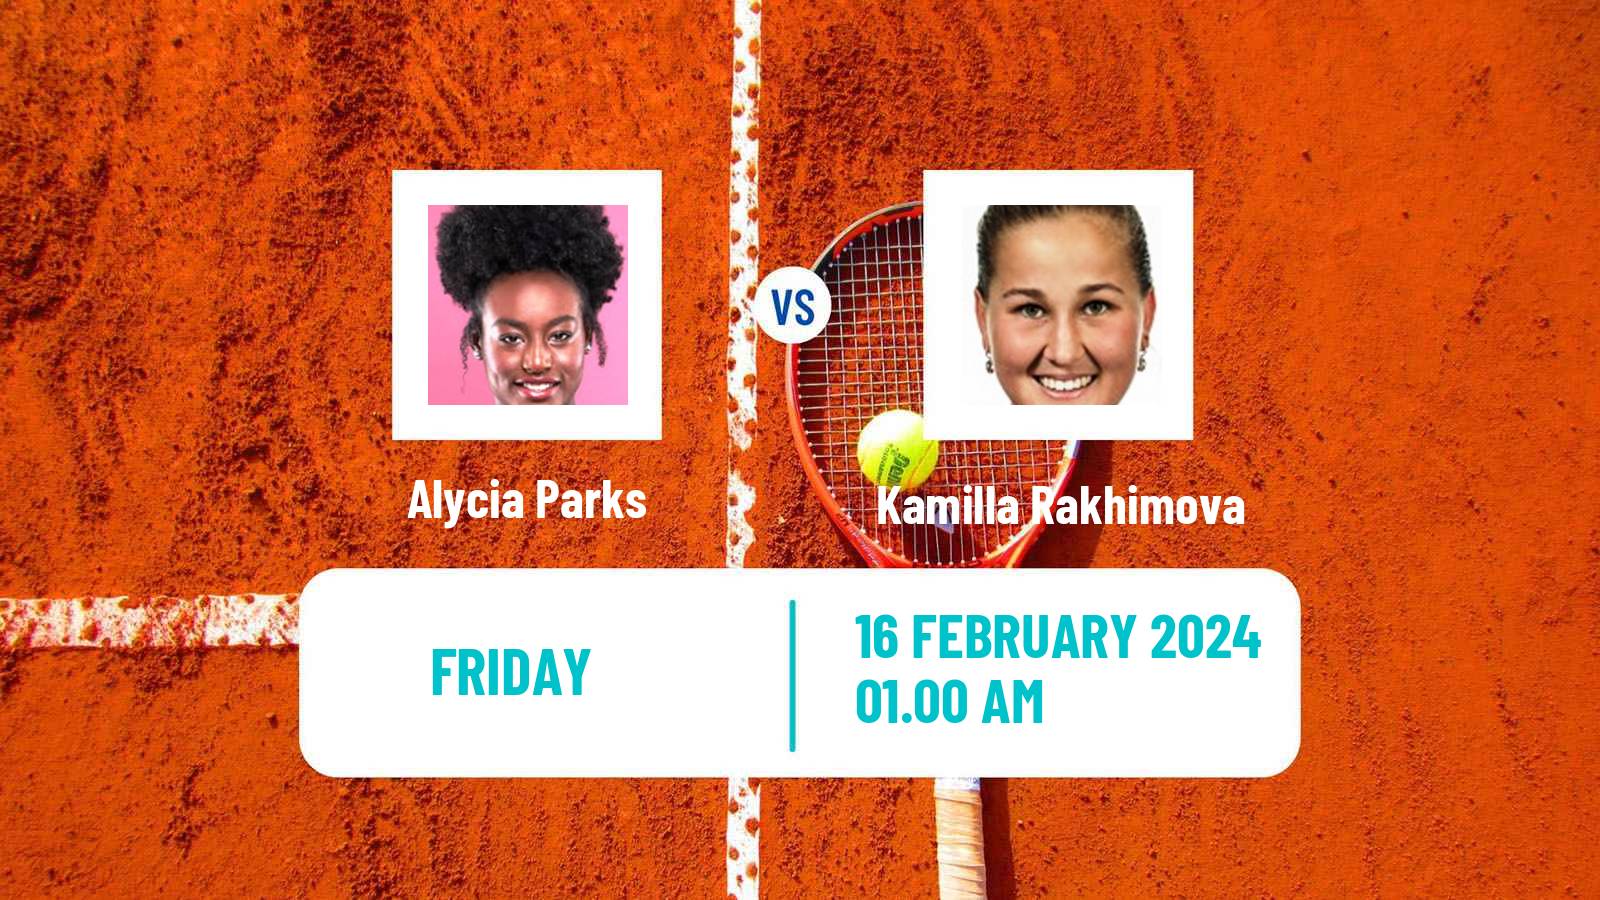 Tennis WTA Dubai Alycia Parks - Kamilla Rakhimova